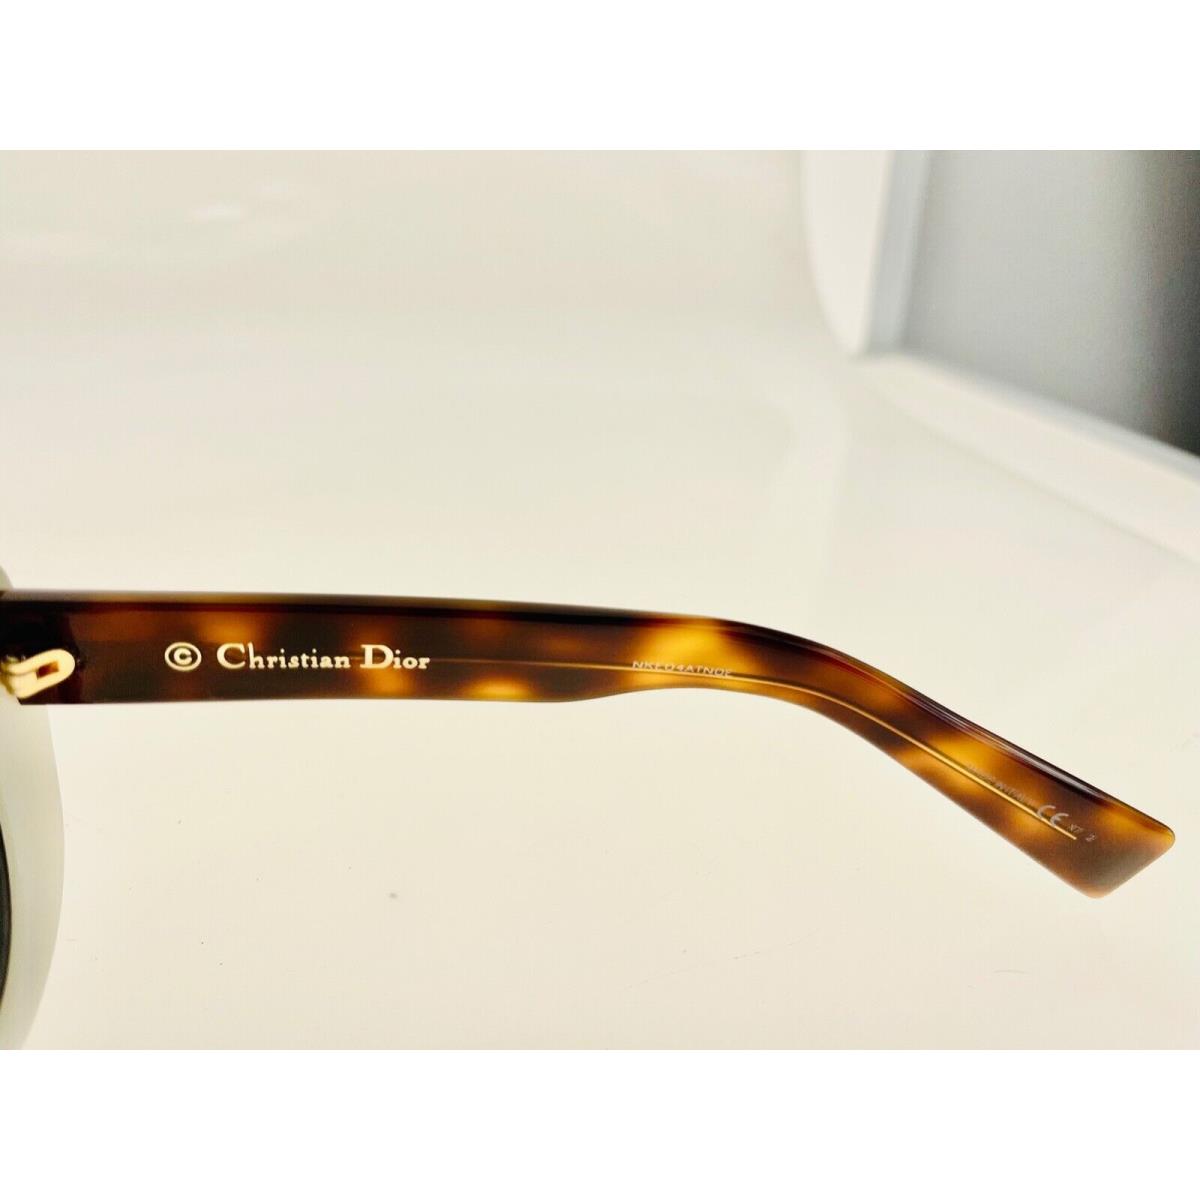 Dior sunglasses  - Frame: Brown, Lens: Gray